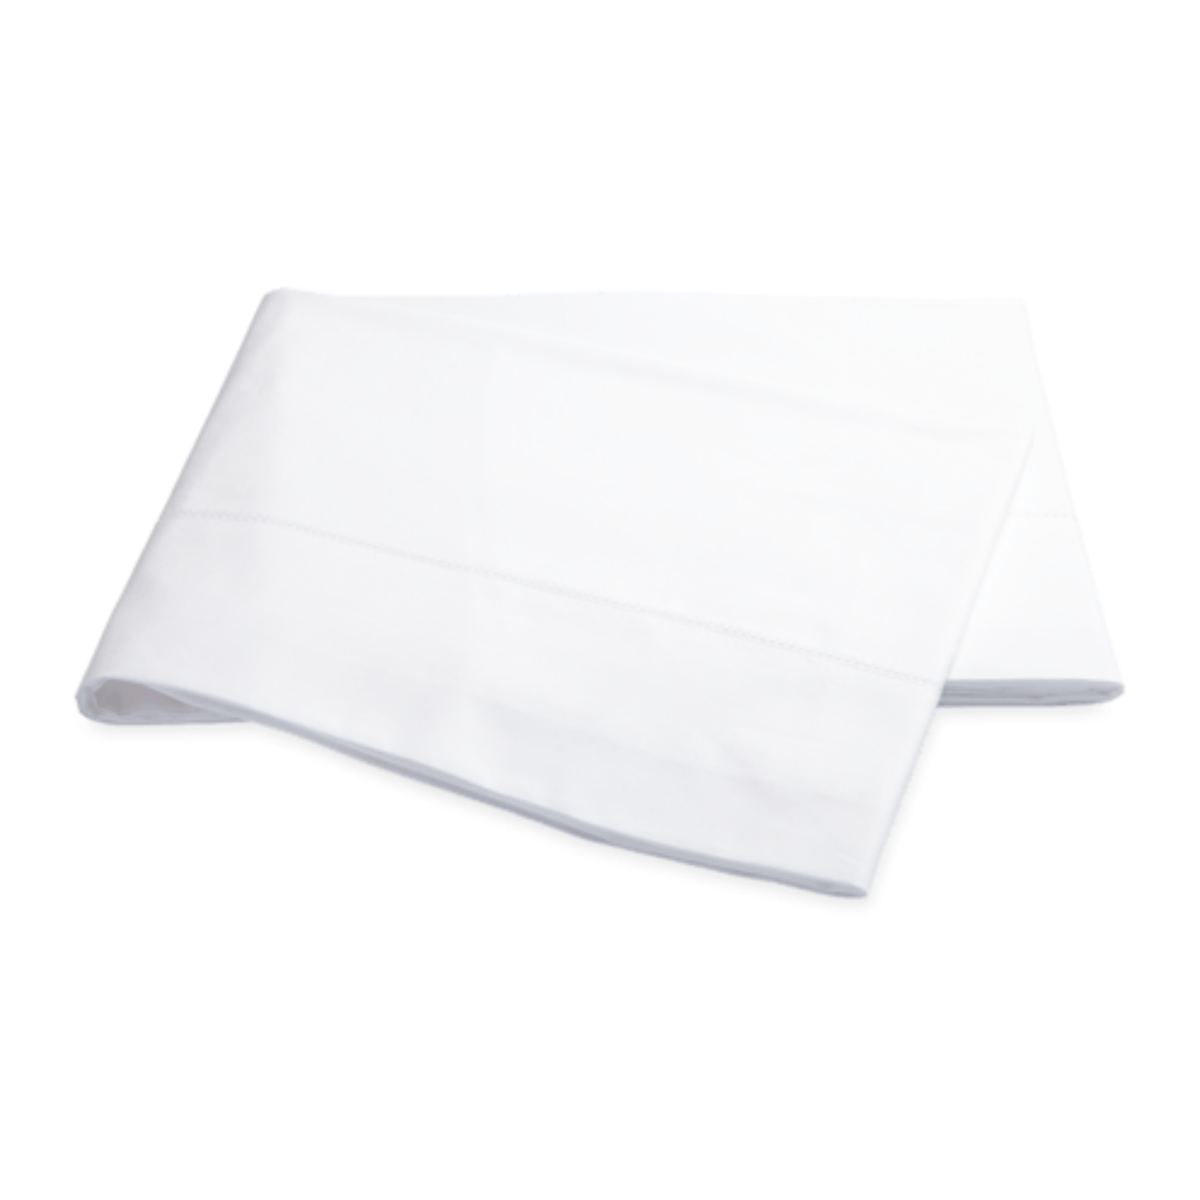 Flat Sheet of Matouk Luca Hemstitch Bedding in White Color